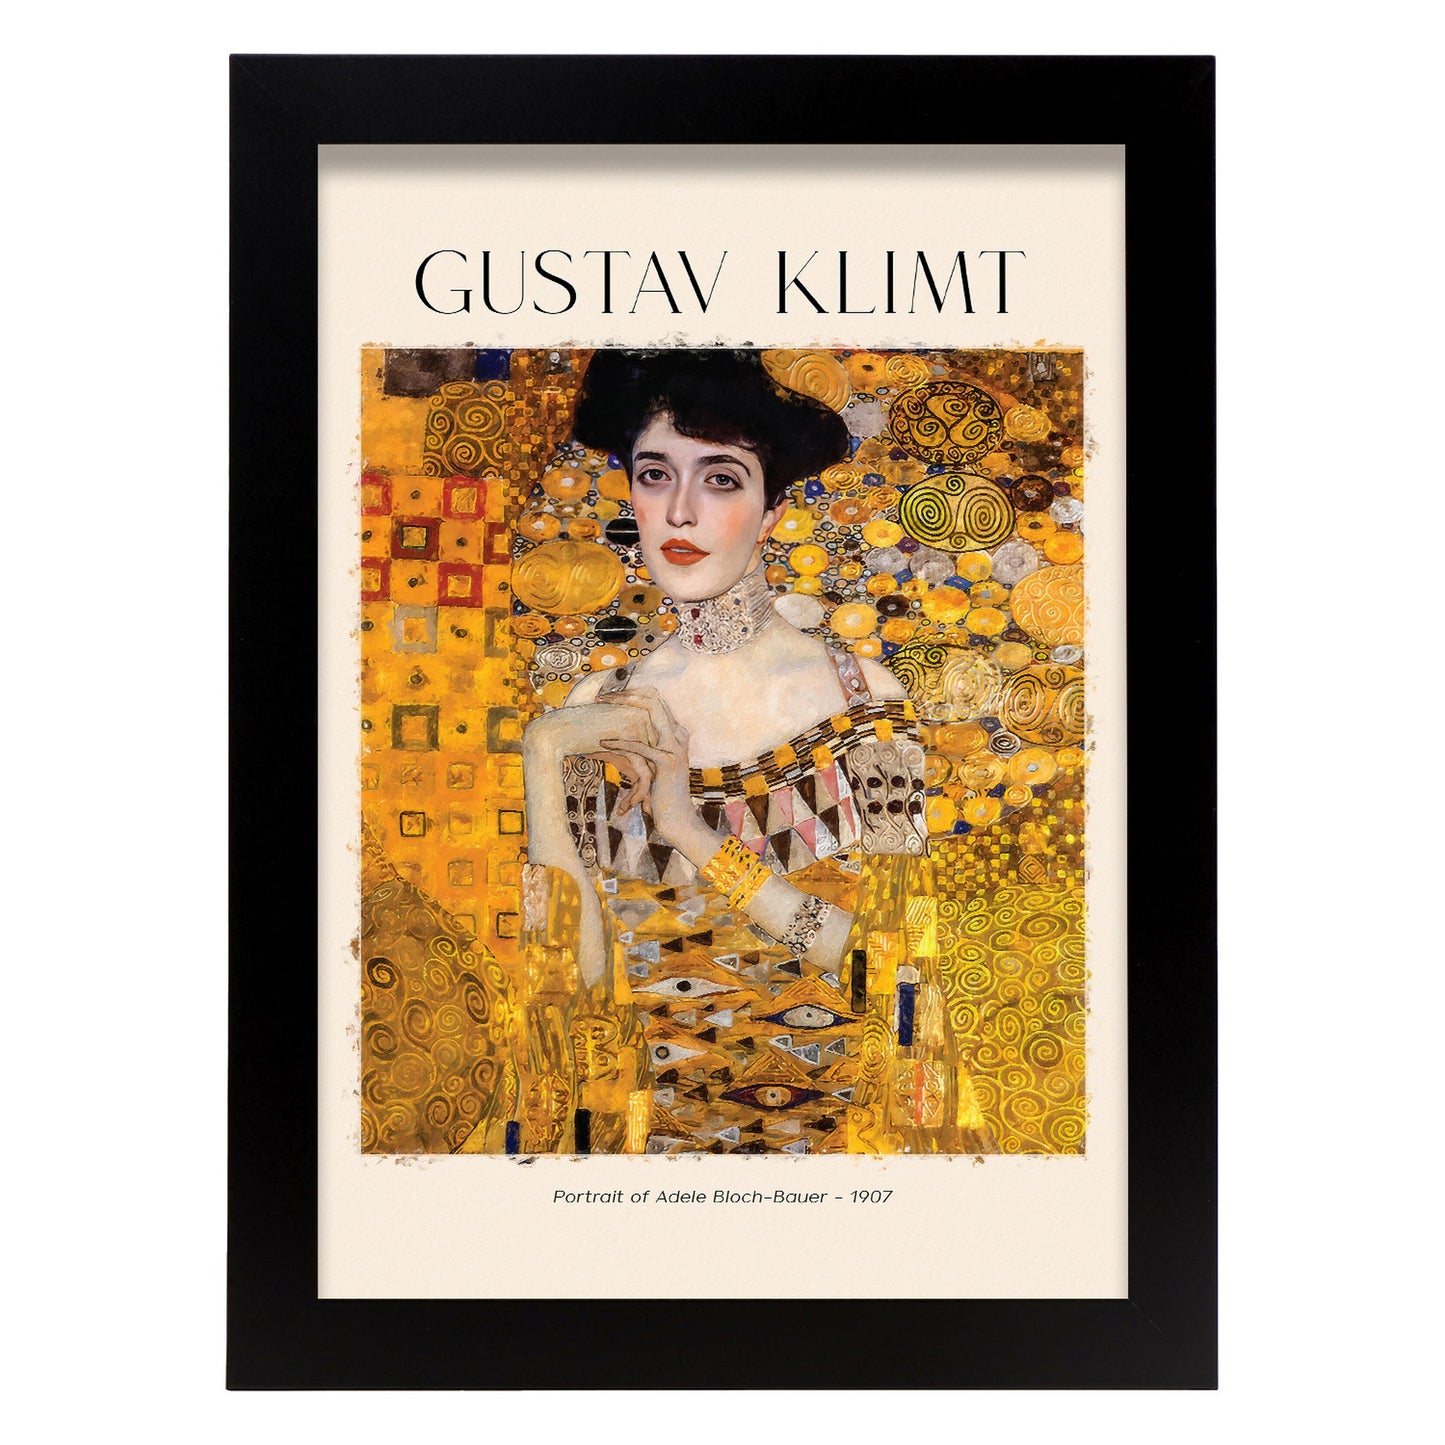 Lámina inspirada en Gustav Klimt del Retrato de Adele